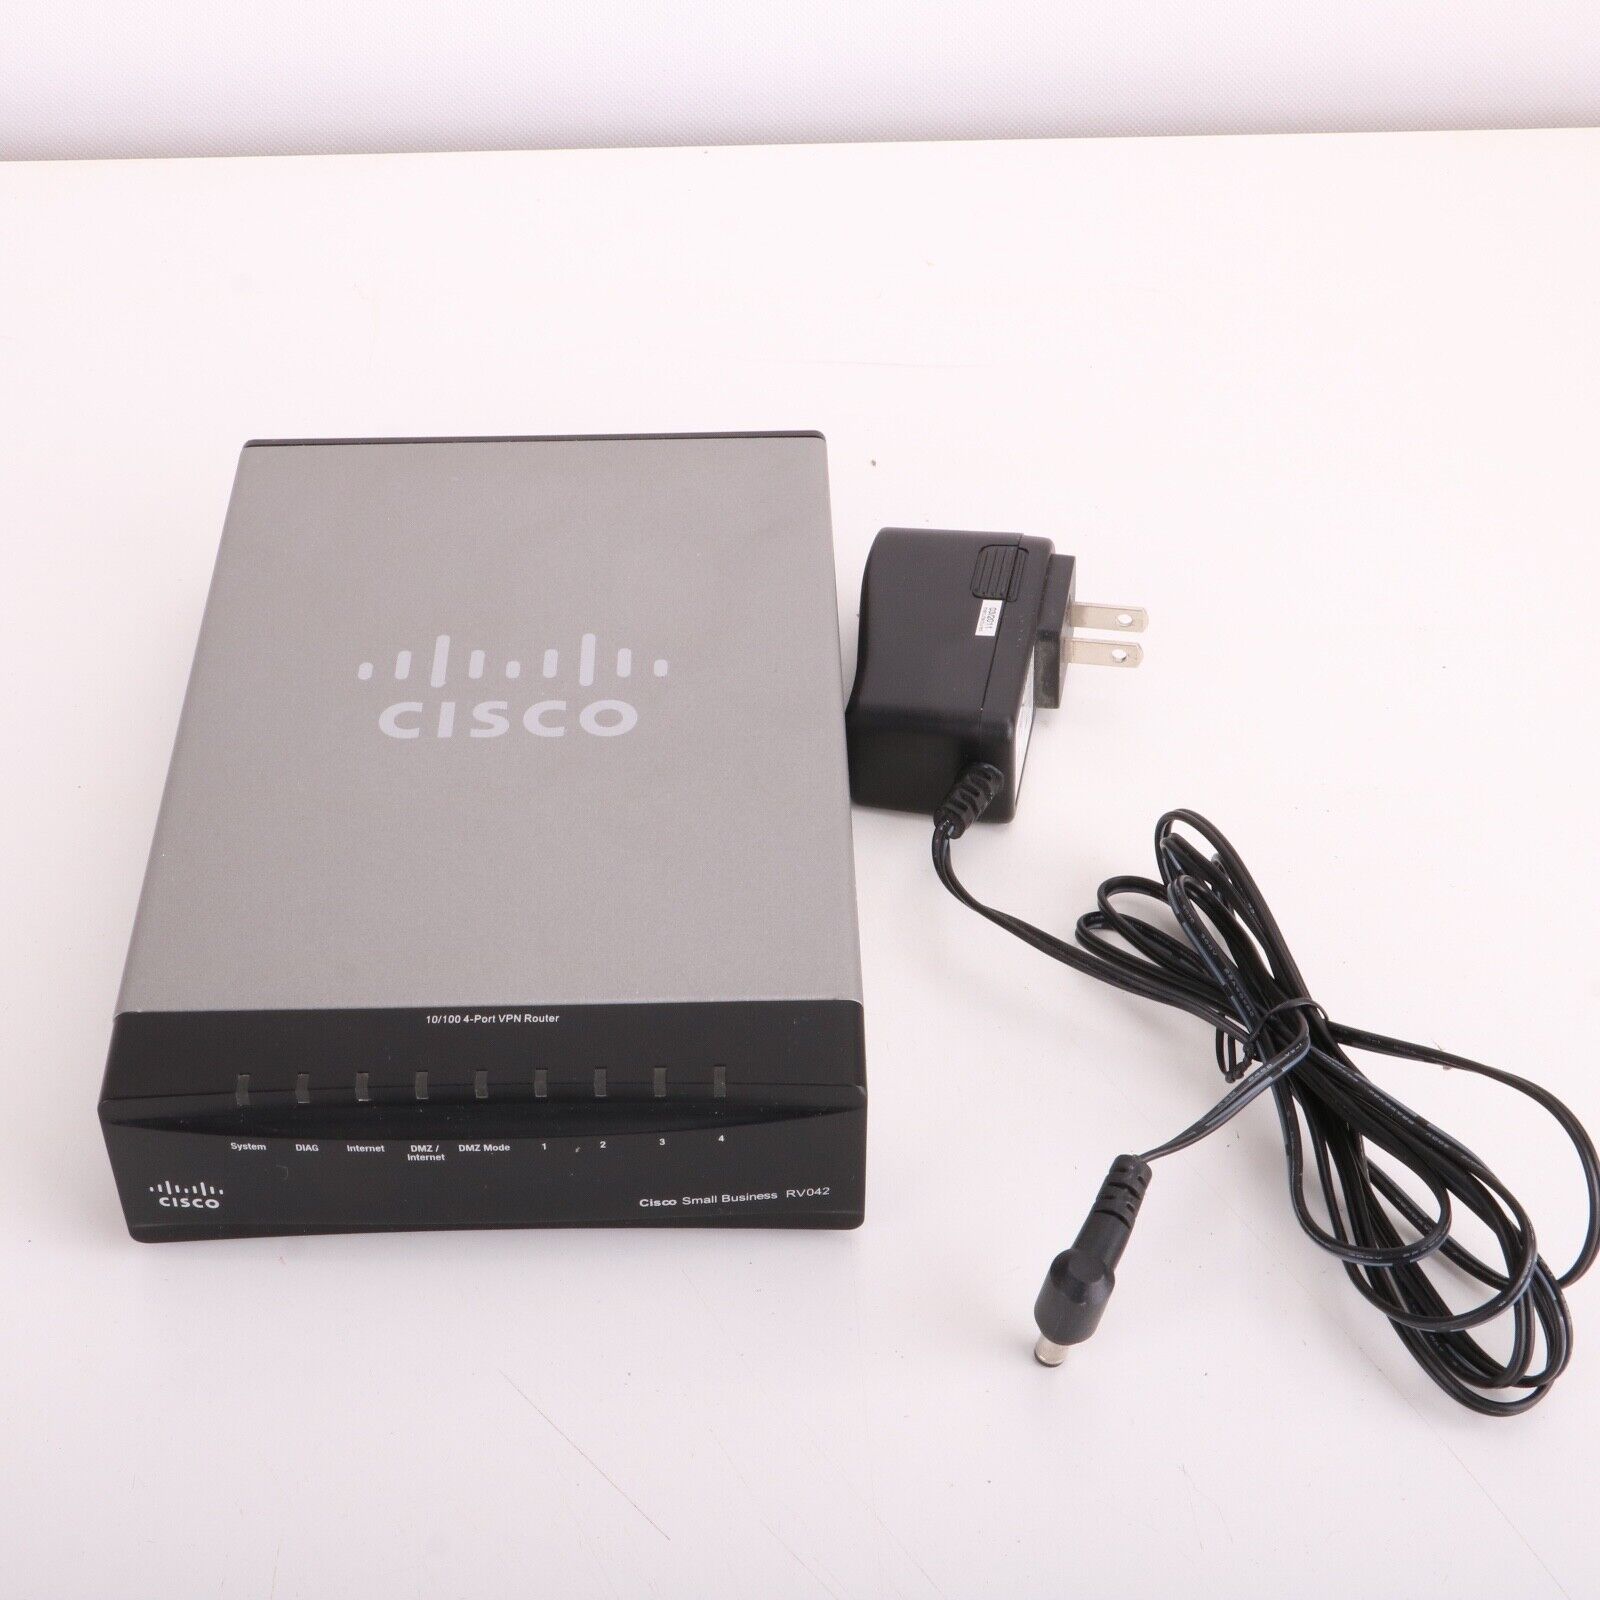 Cisco RV042 V03 4-port 10/100 Small Business VPN Router